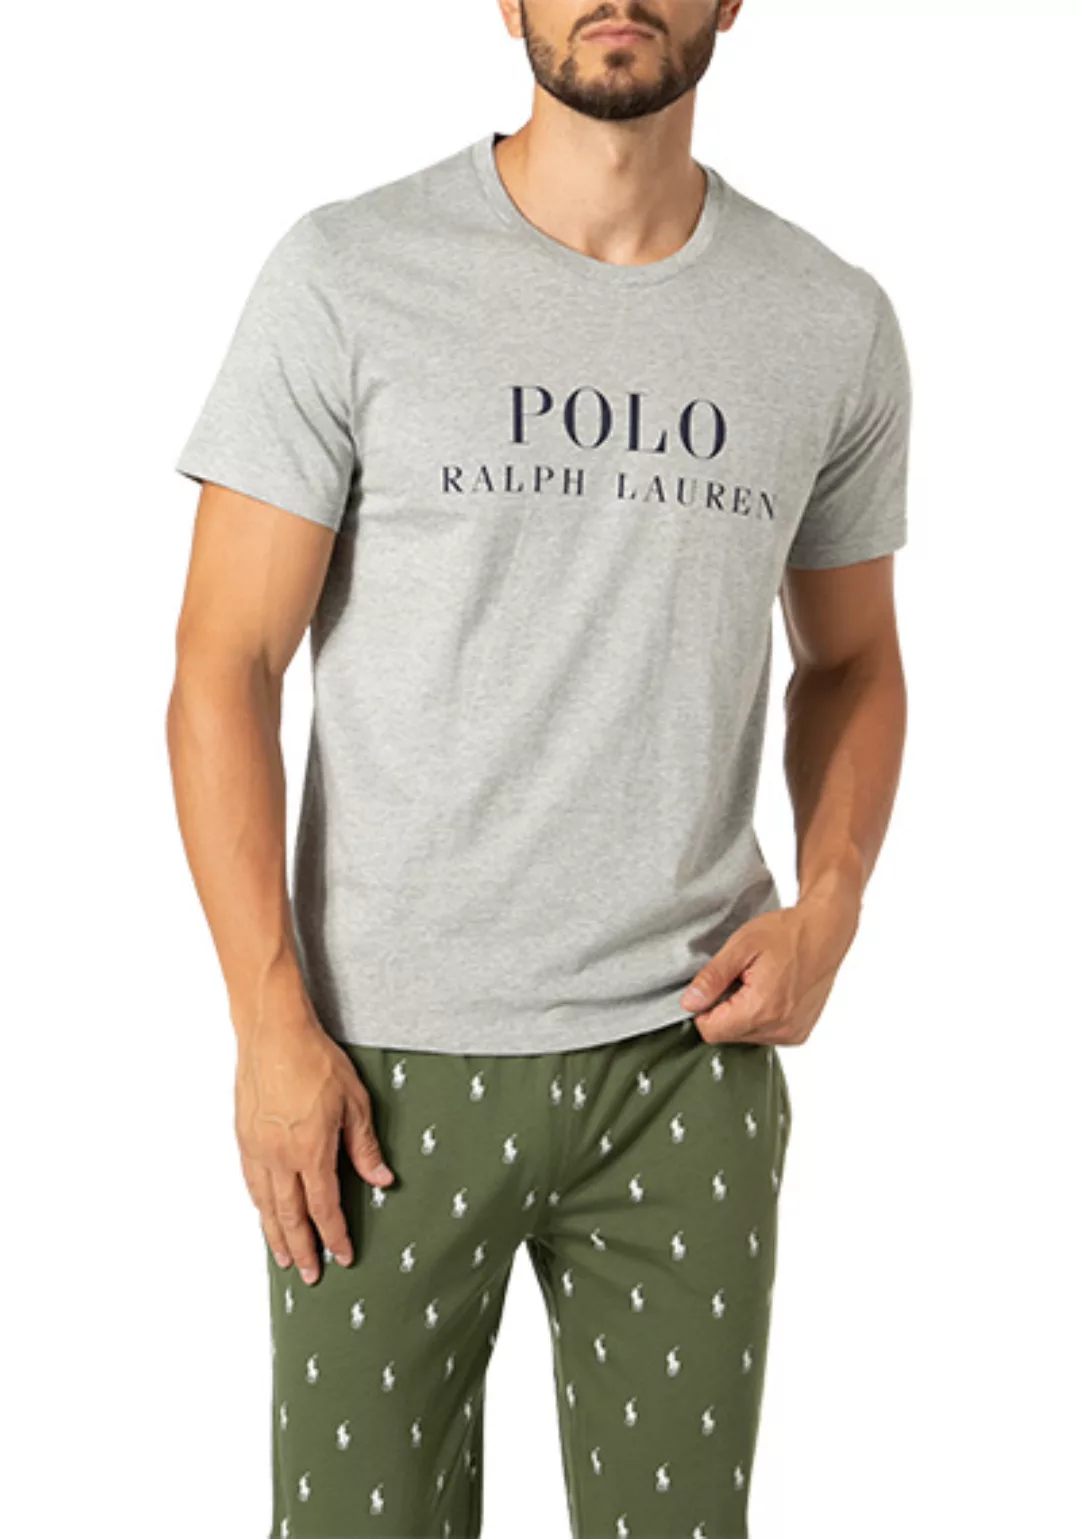 Polo Ralph Lauren Sleep Top 714830278/005 günstig online kaufen